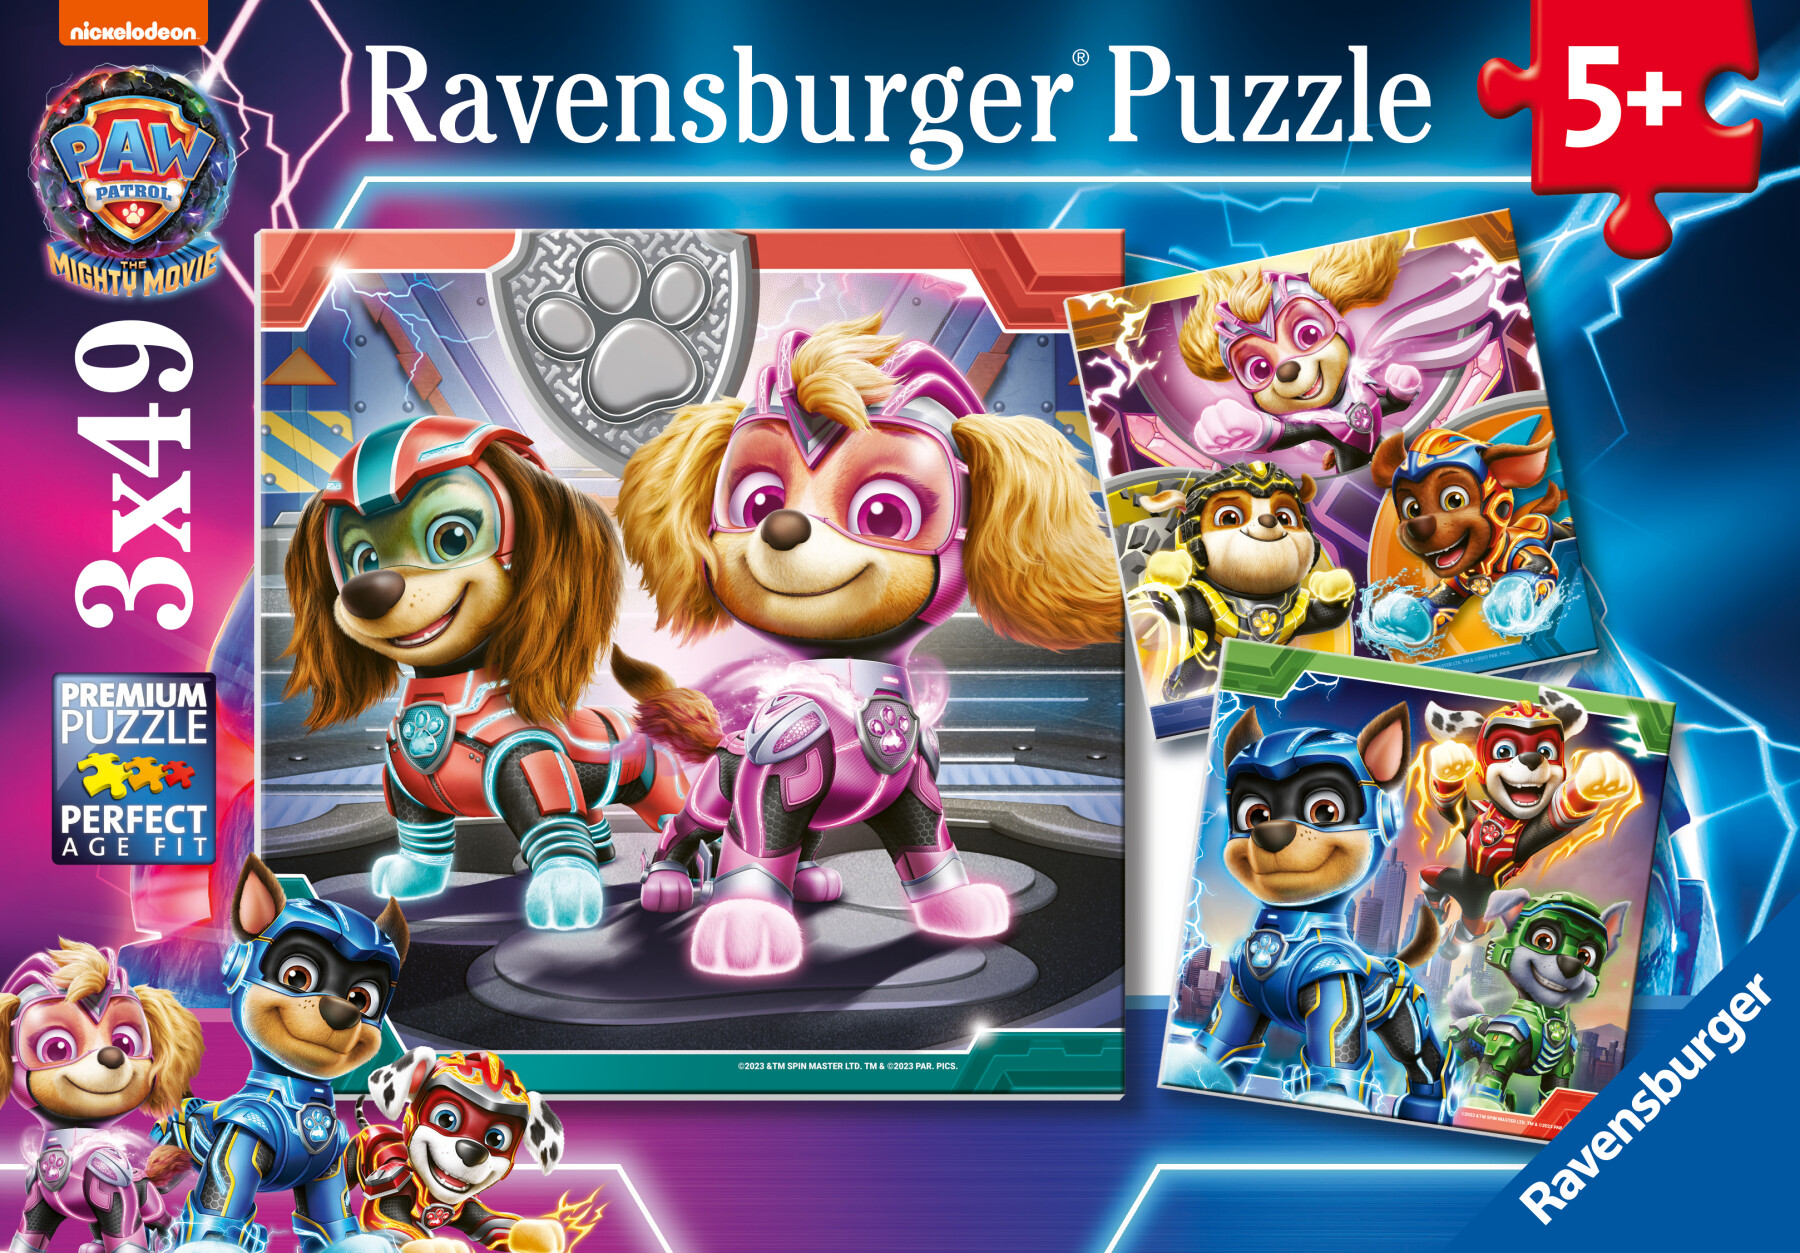 Ravensburger - puzzle paw patrol - the mighty movie, collezione 3x49, 3 puzzle da 49 pezzi, età raccomandata 5+ anni - RAVENSBURGER, Paw Patrol